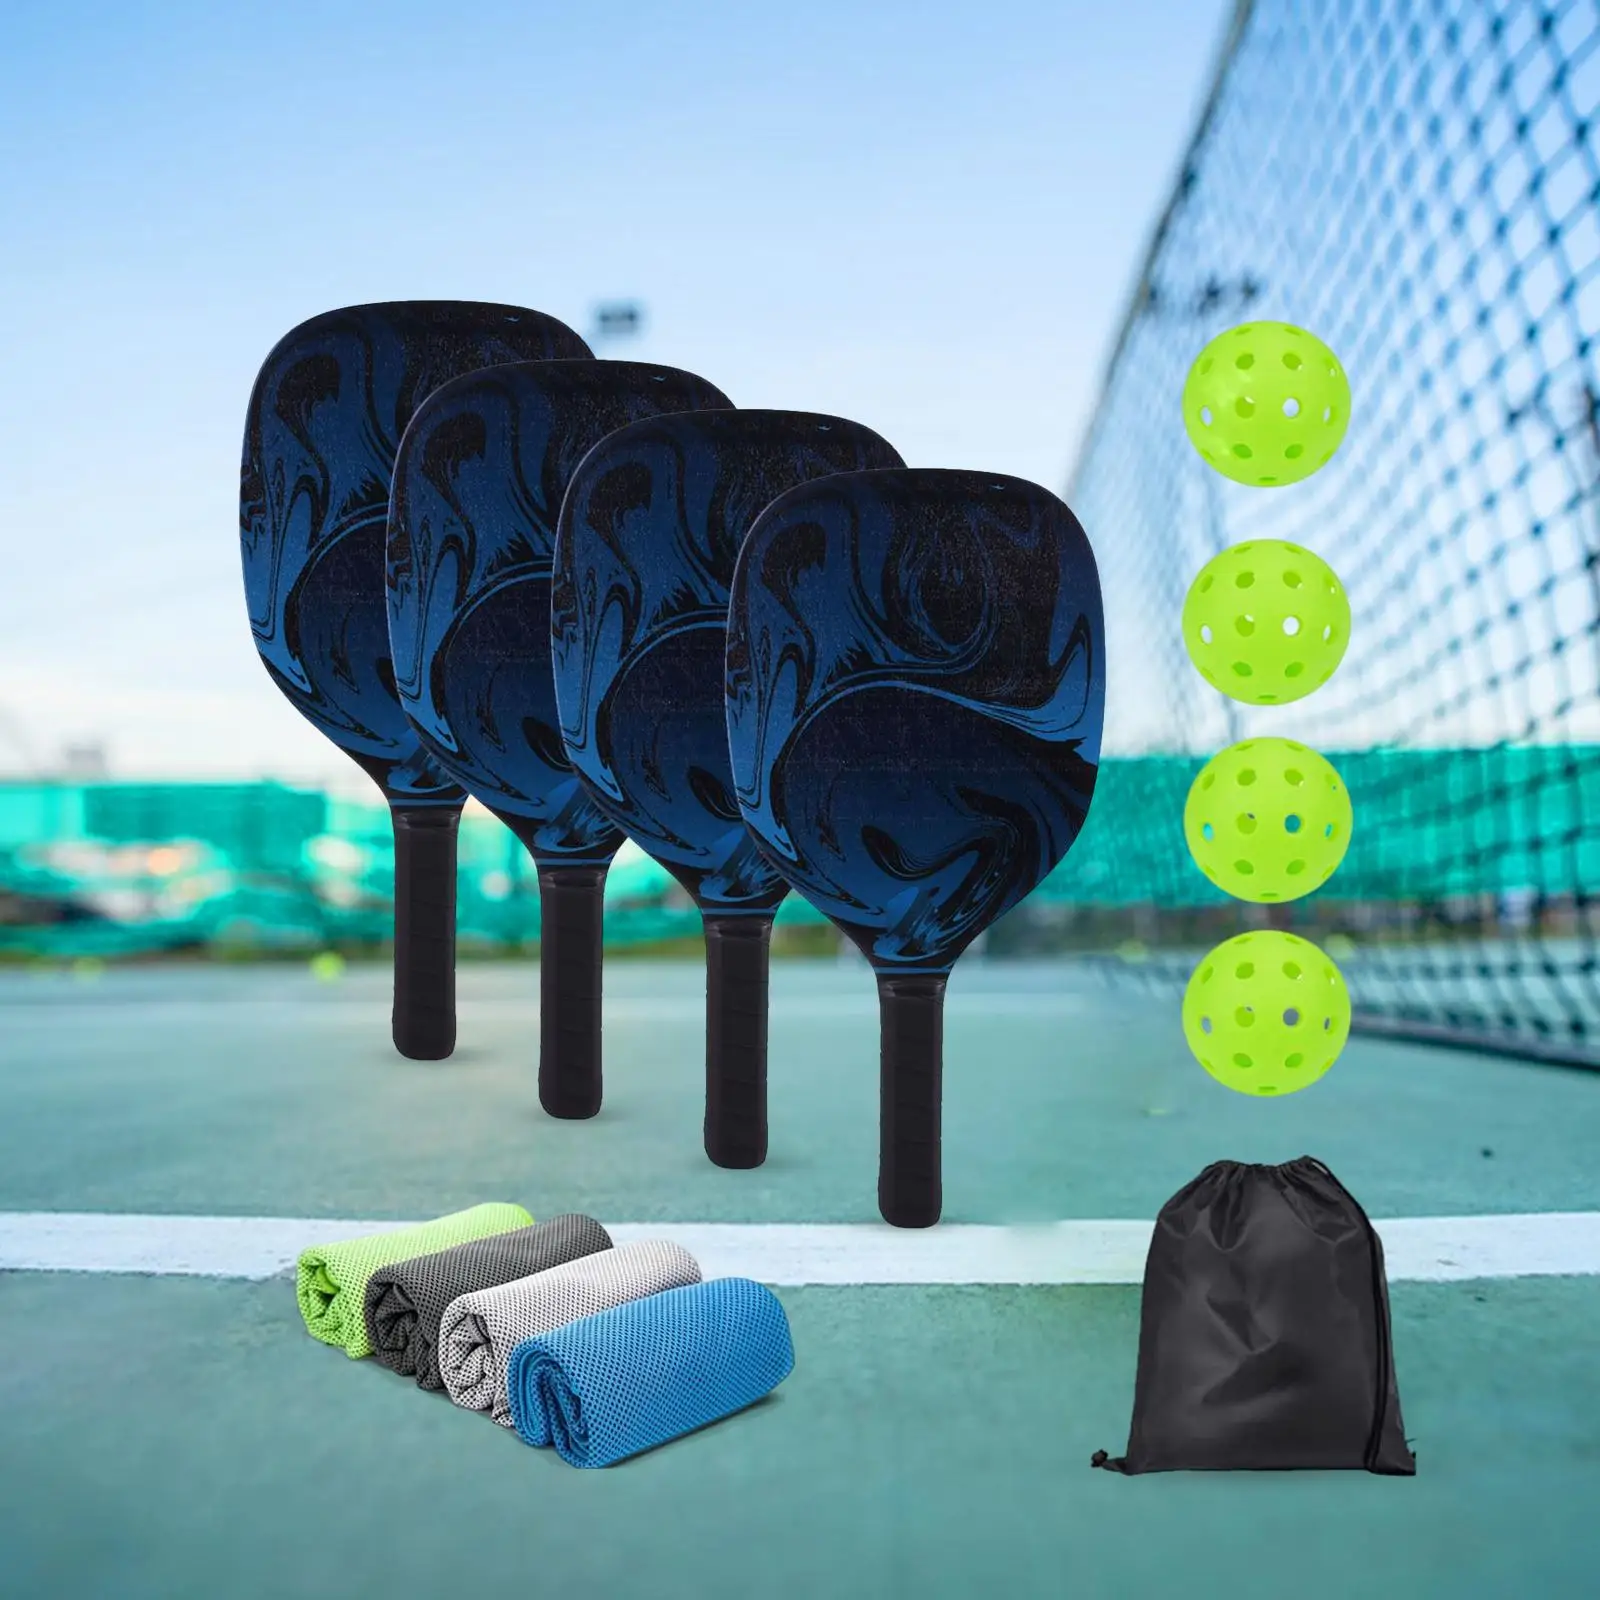 

4x Basswood Pickleball Paddles 4 Pickleball Balls 4 Towels Lightweight Pickleball Rackets Set Racquets with Bag Comfort Grip